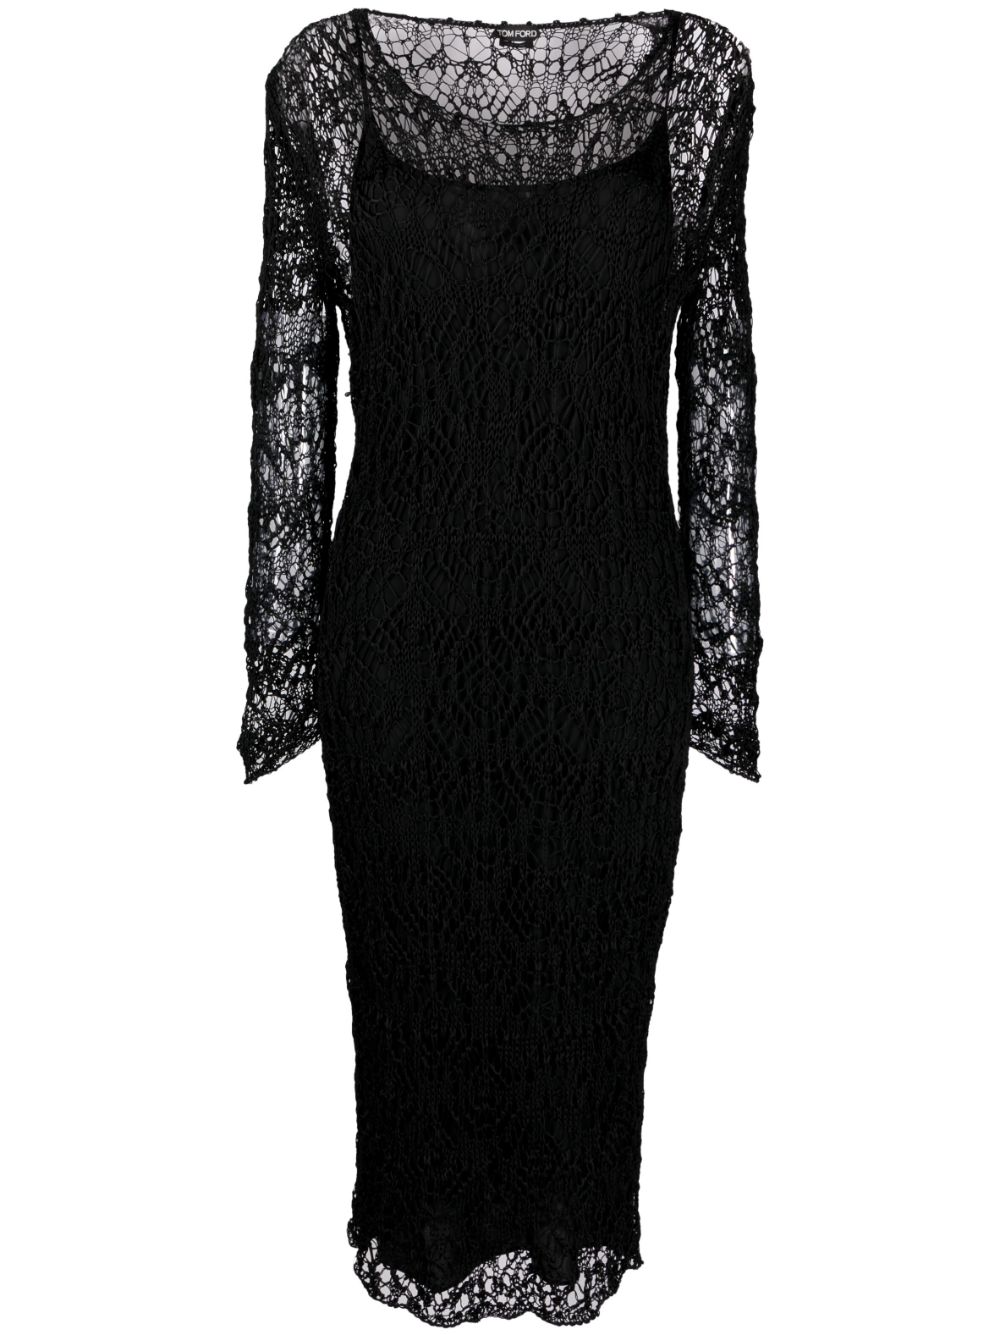 TOM FORD lace-patterned pencil dress - Black von TOM FORD